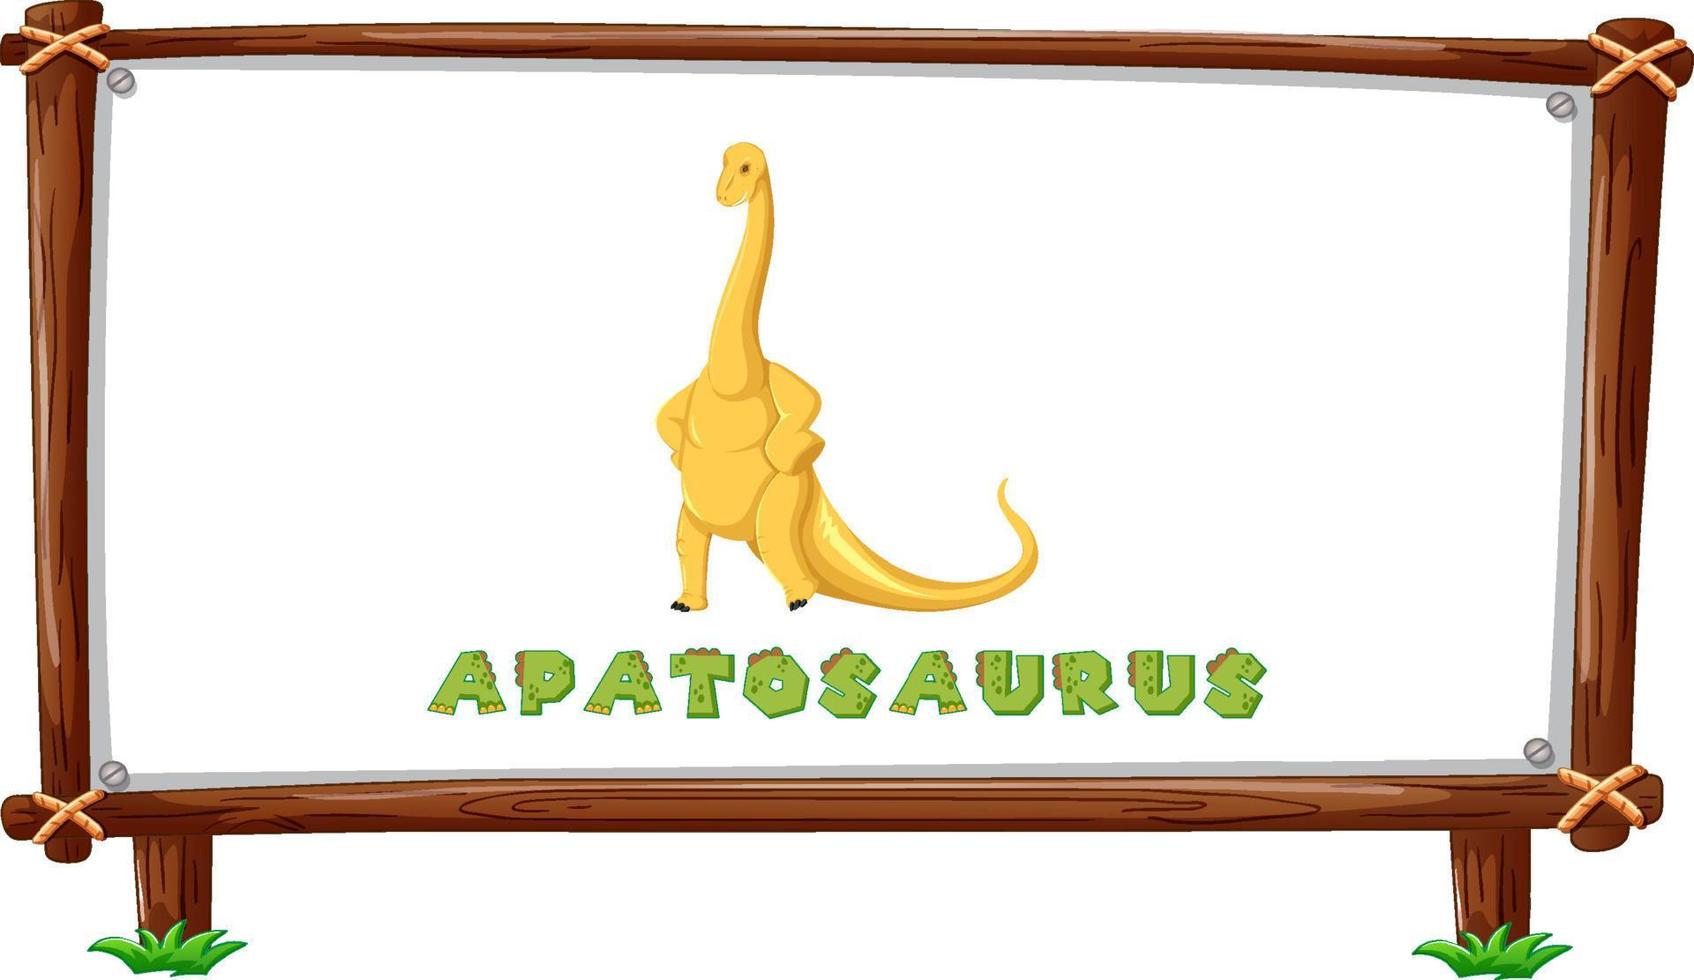 plantilla de marco con dinosaurios y diseño de apatosaurio de texto dentro vector